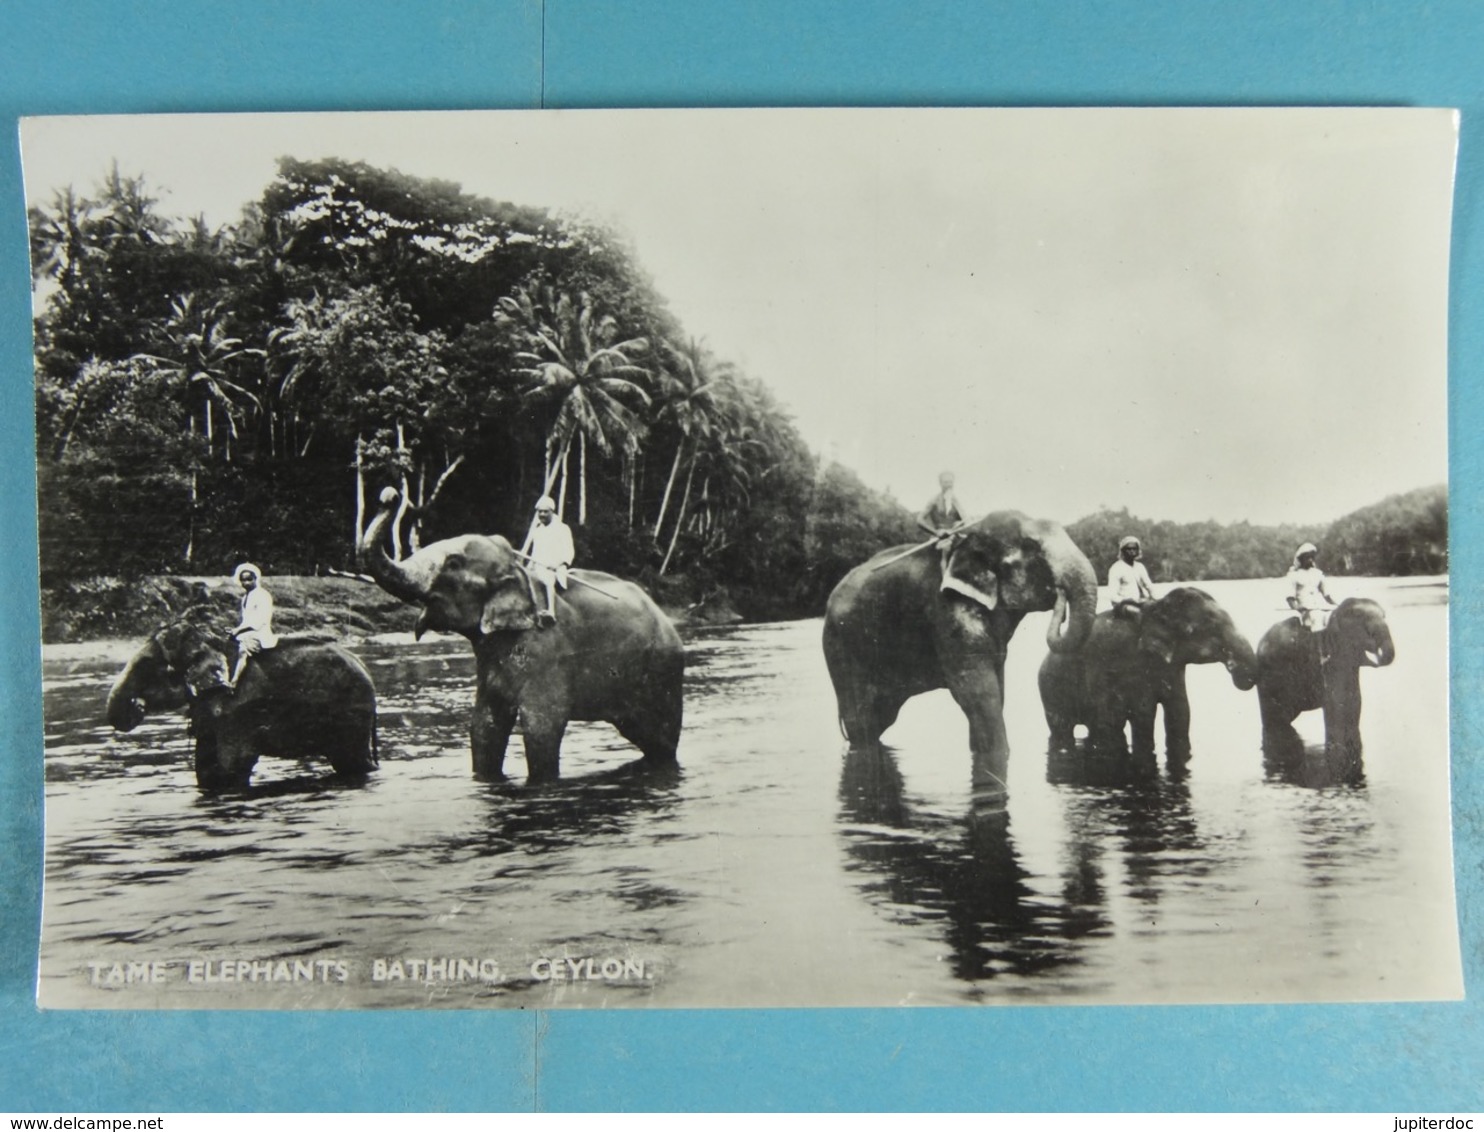 Tame Elephants Bathing Ceylon - Sri Lanka (Ceylon)